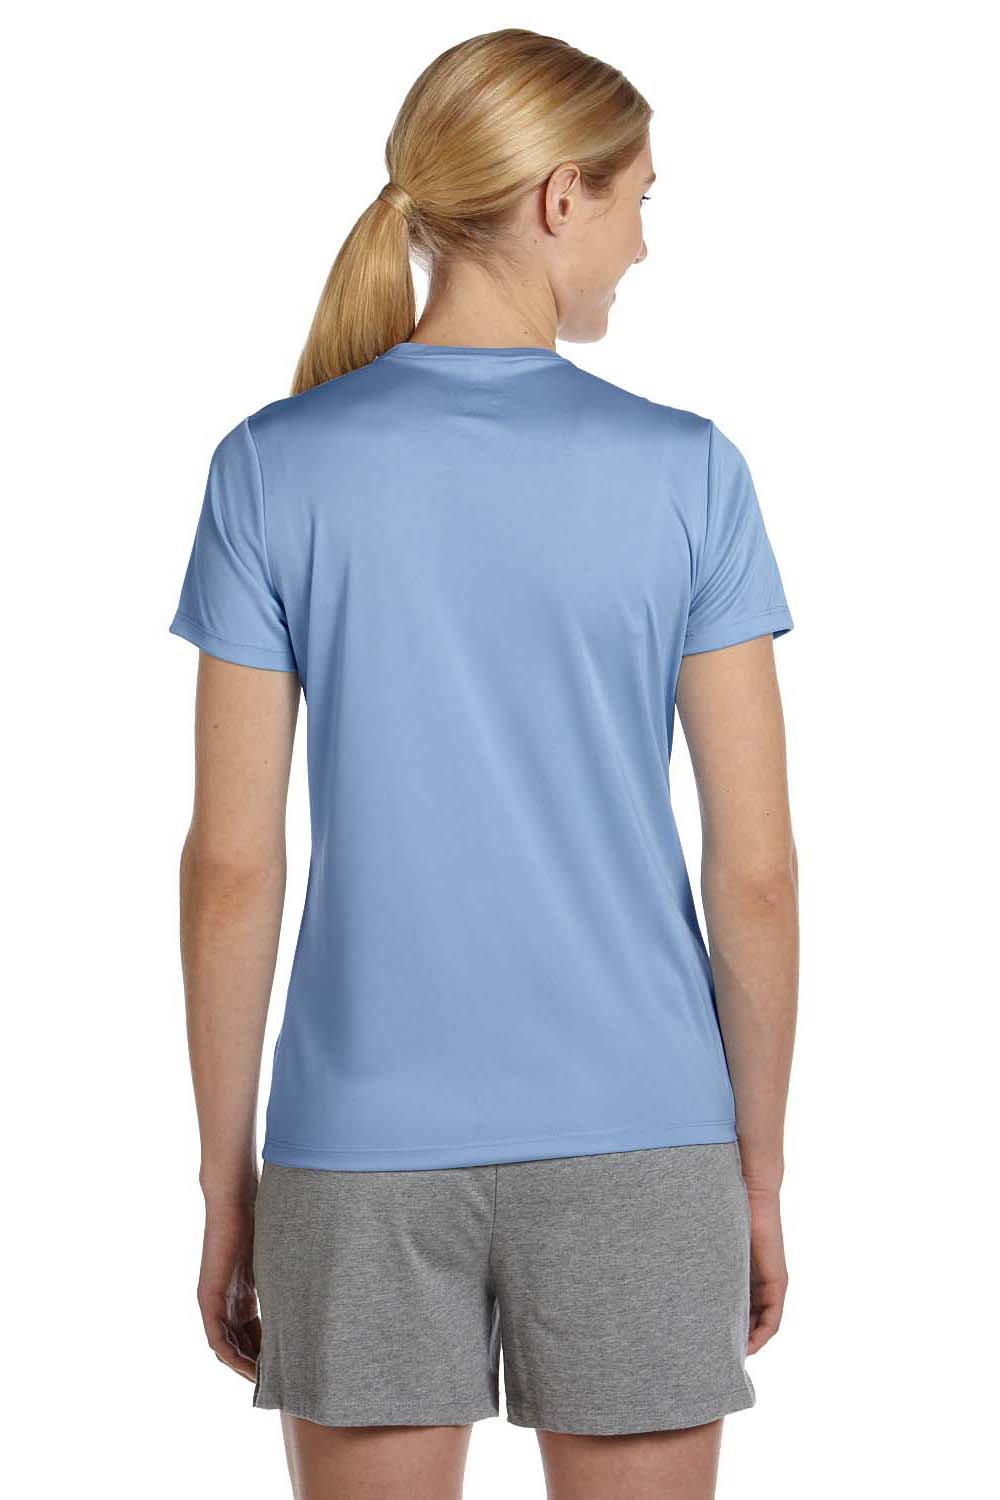 Hanes 4830 Womens Cool DRI FreshIQ Moisture Wicking Short Sleeve Crewneck T-Shirt Light Blue Back